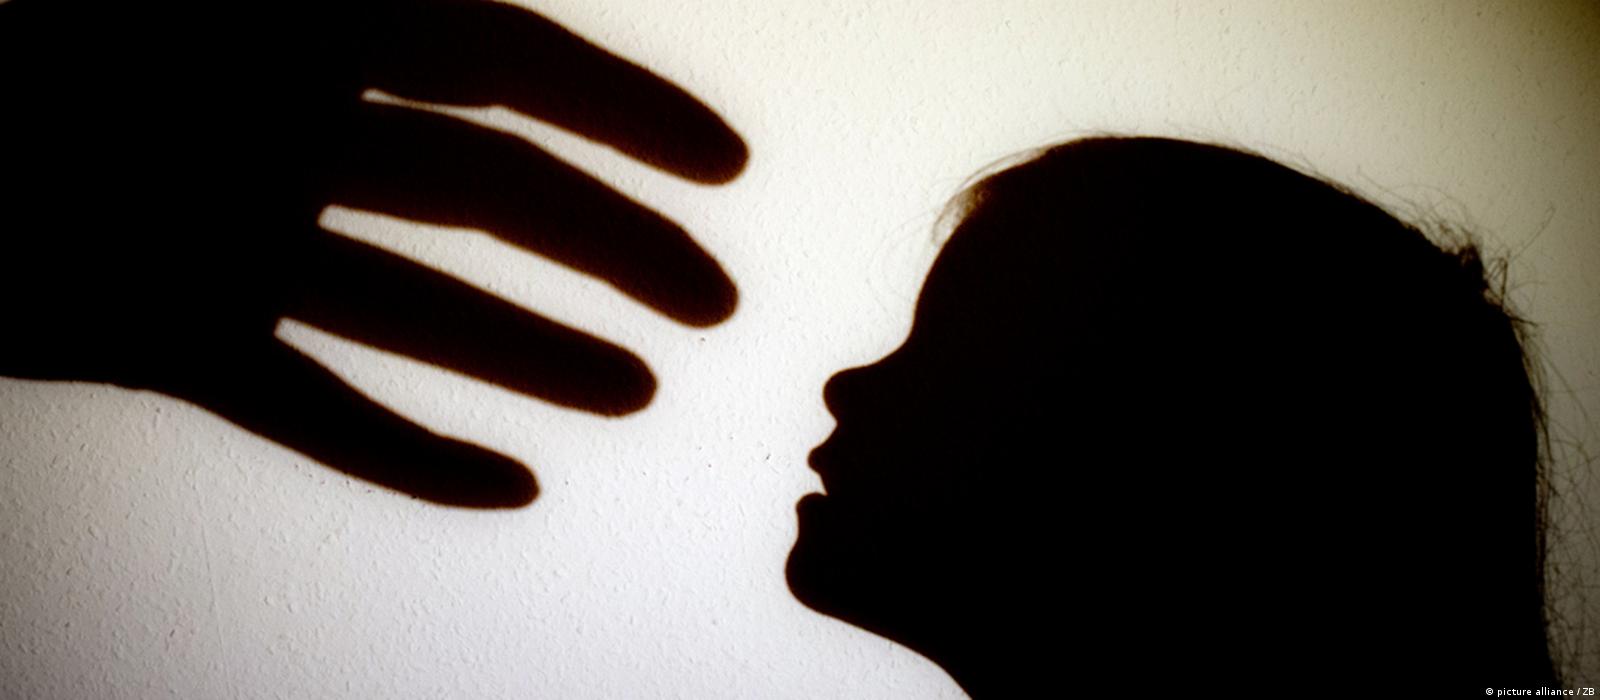 Bd Prova Sex - Sex crimes, child rapes horrify Bangladesh â€“ DW â€“ 07/10/2019